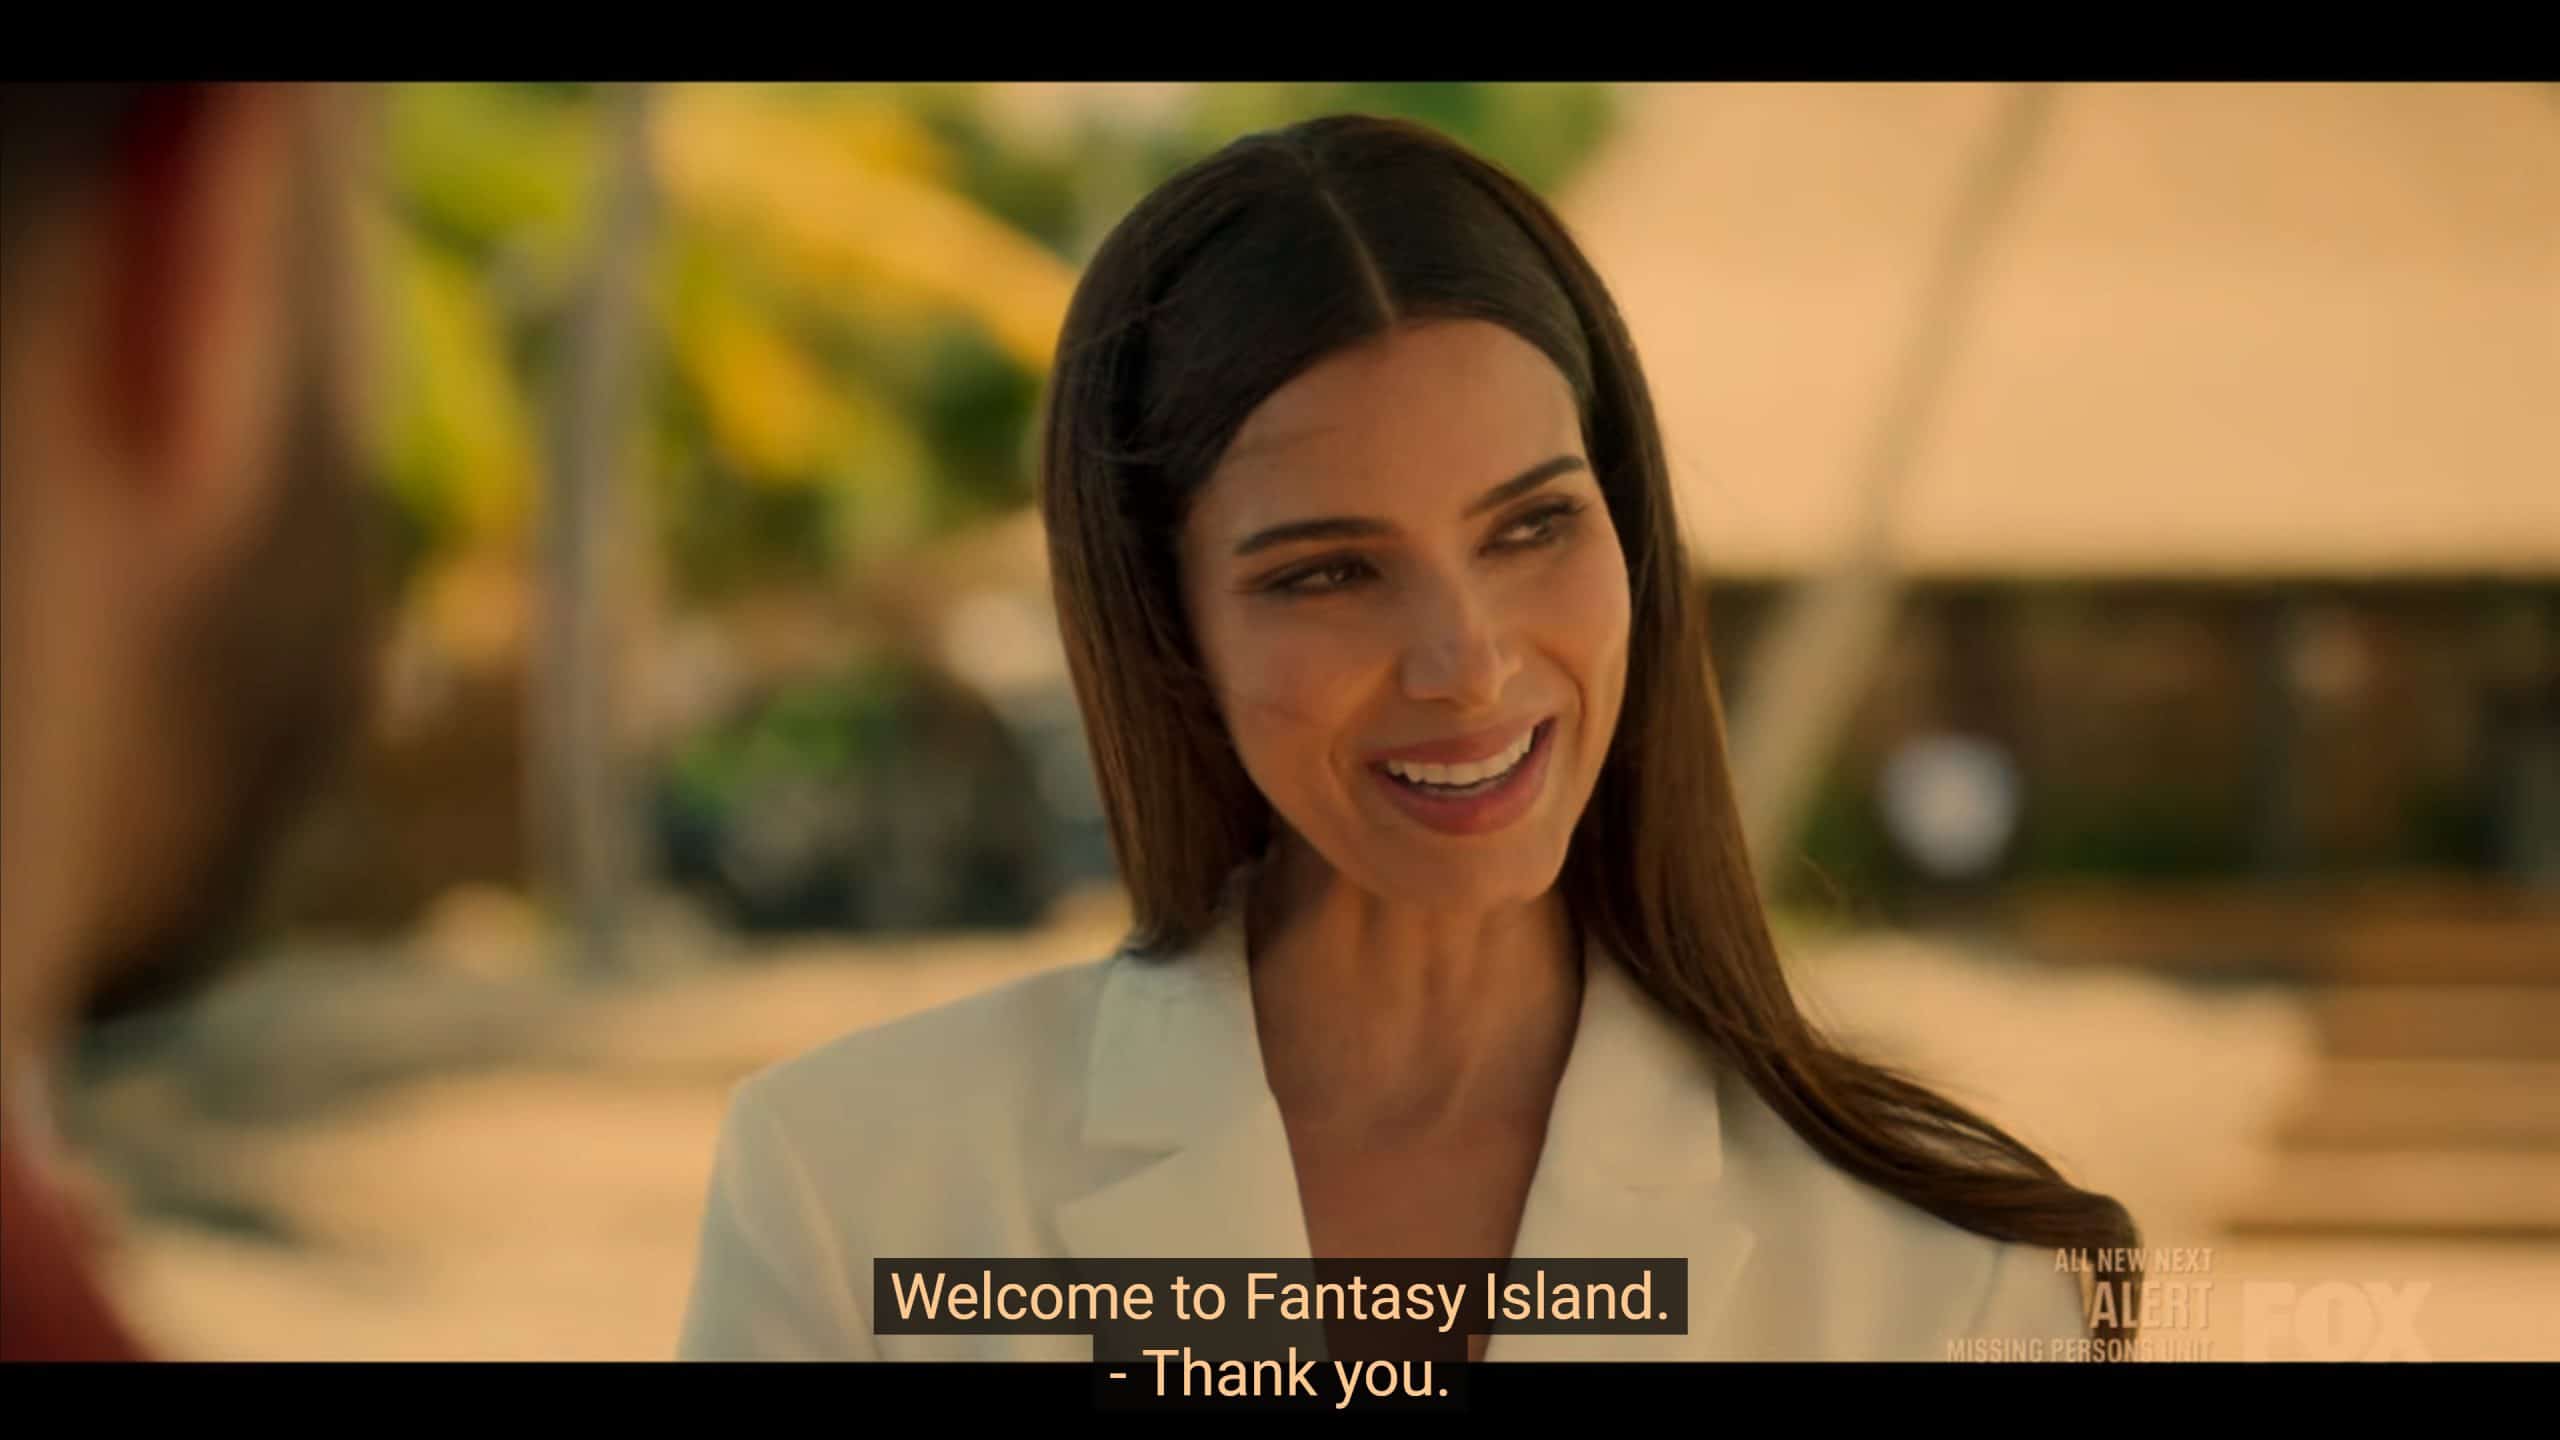 Elena welcoming the guys to Fantasy Island